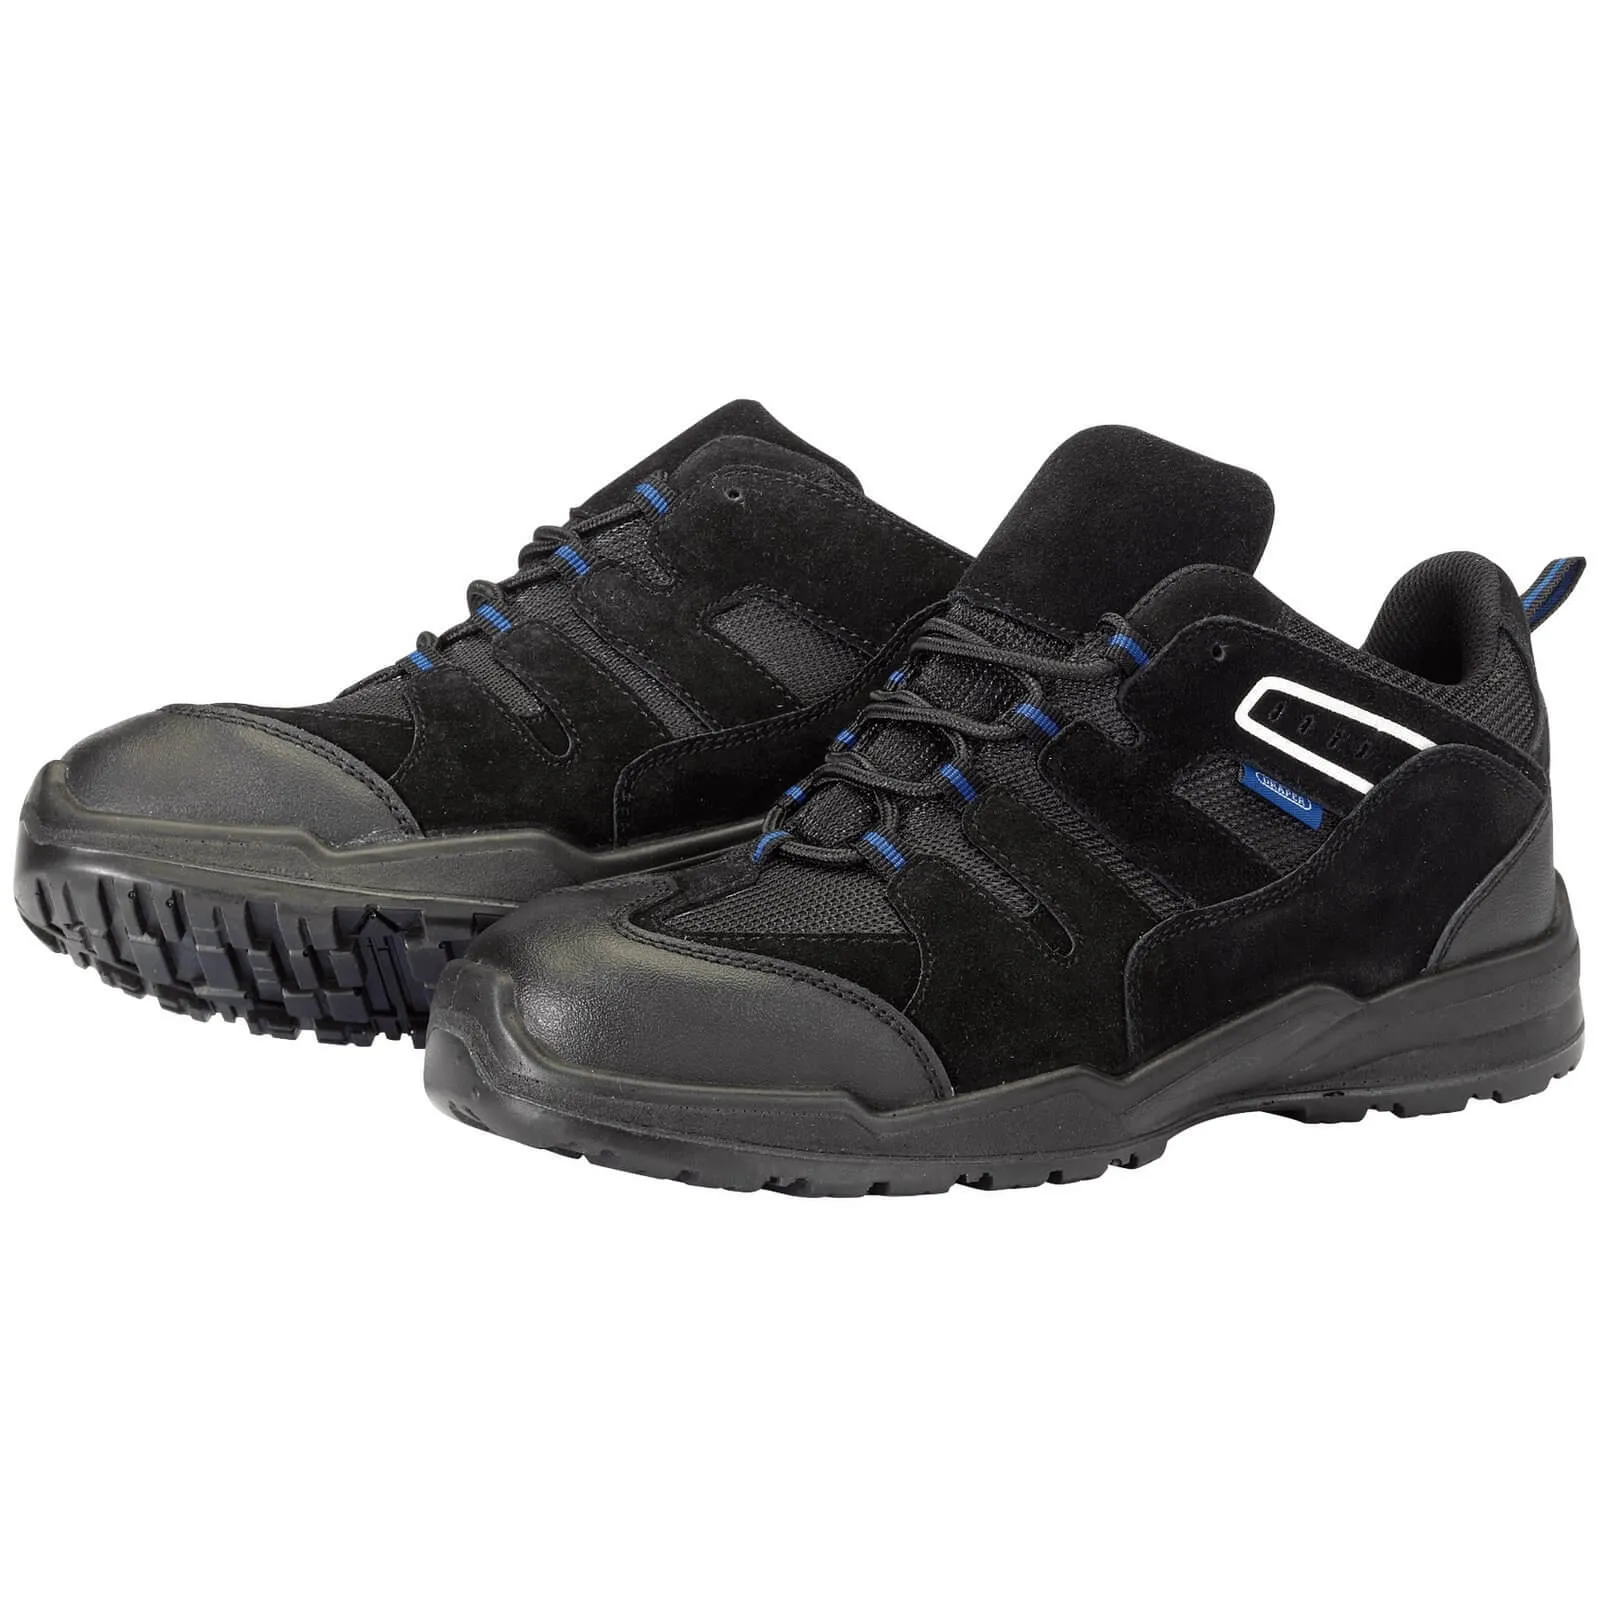 Draper Trainer Style Safety Shoe - Black, Size 9